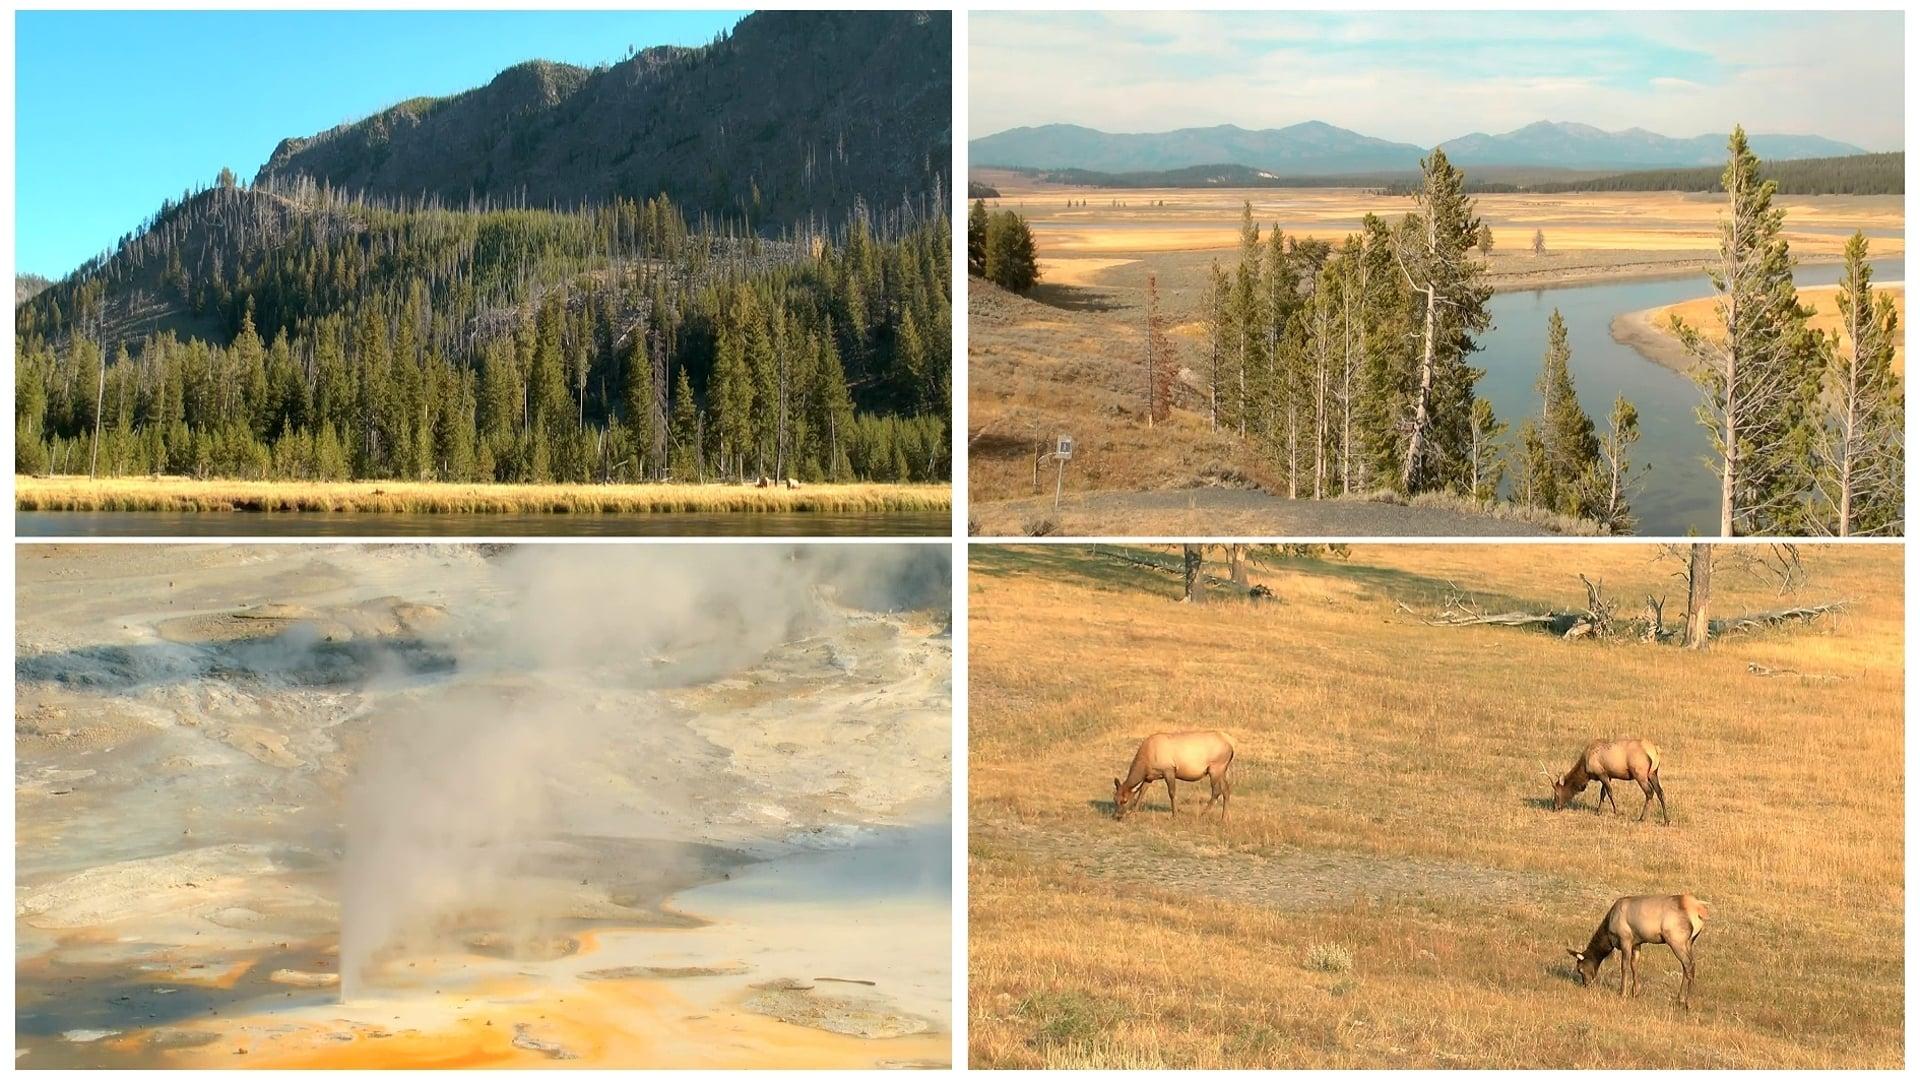 World Natural Heritage USA: Yellowstone National Park backdrop